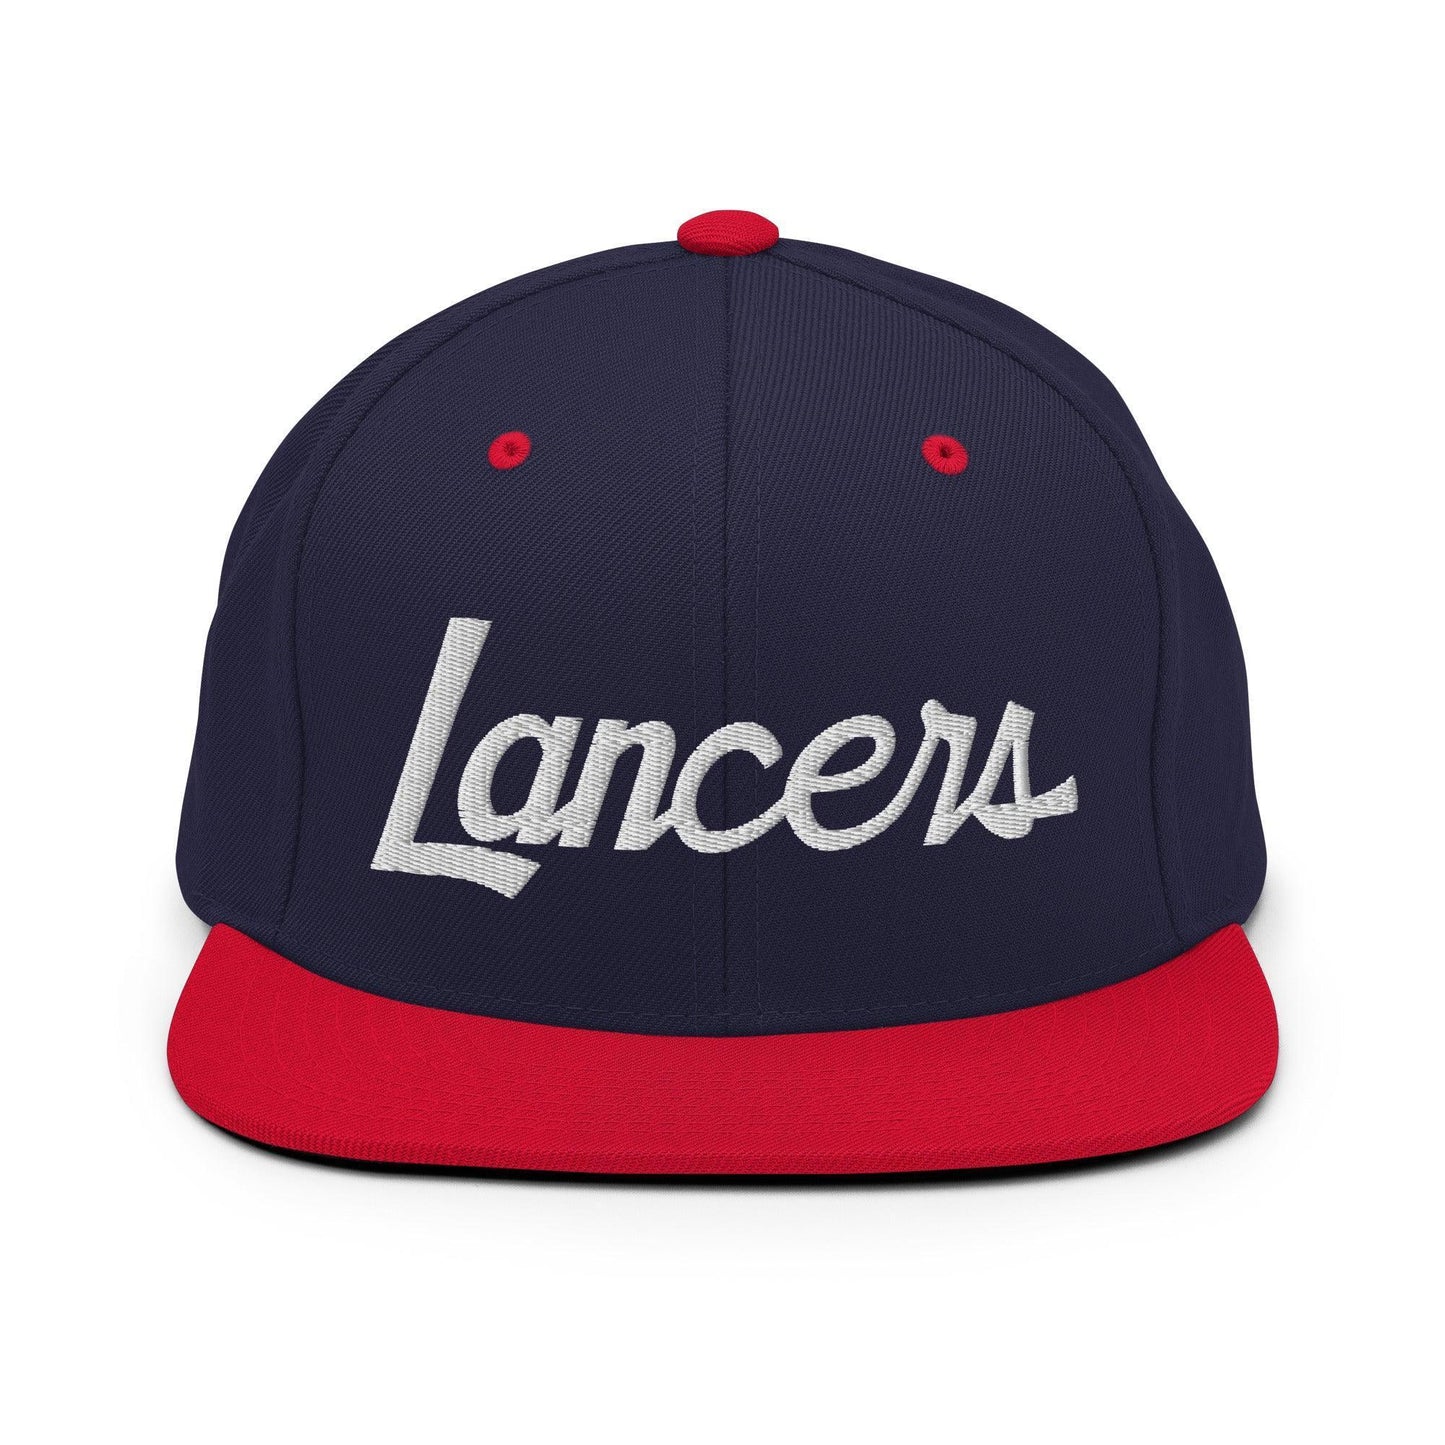 Lancers School Mascot Script Snapback Hat Navy Red